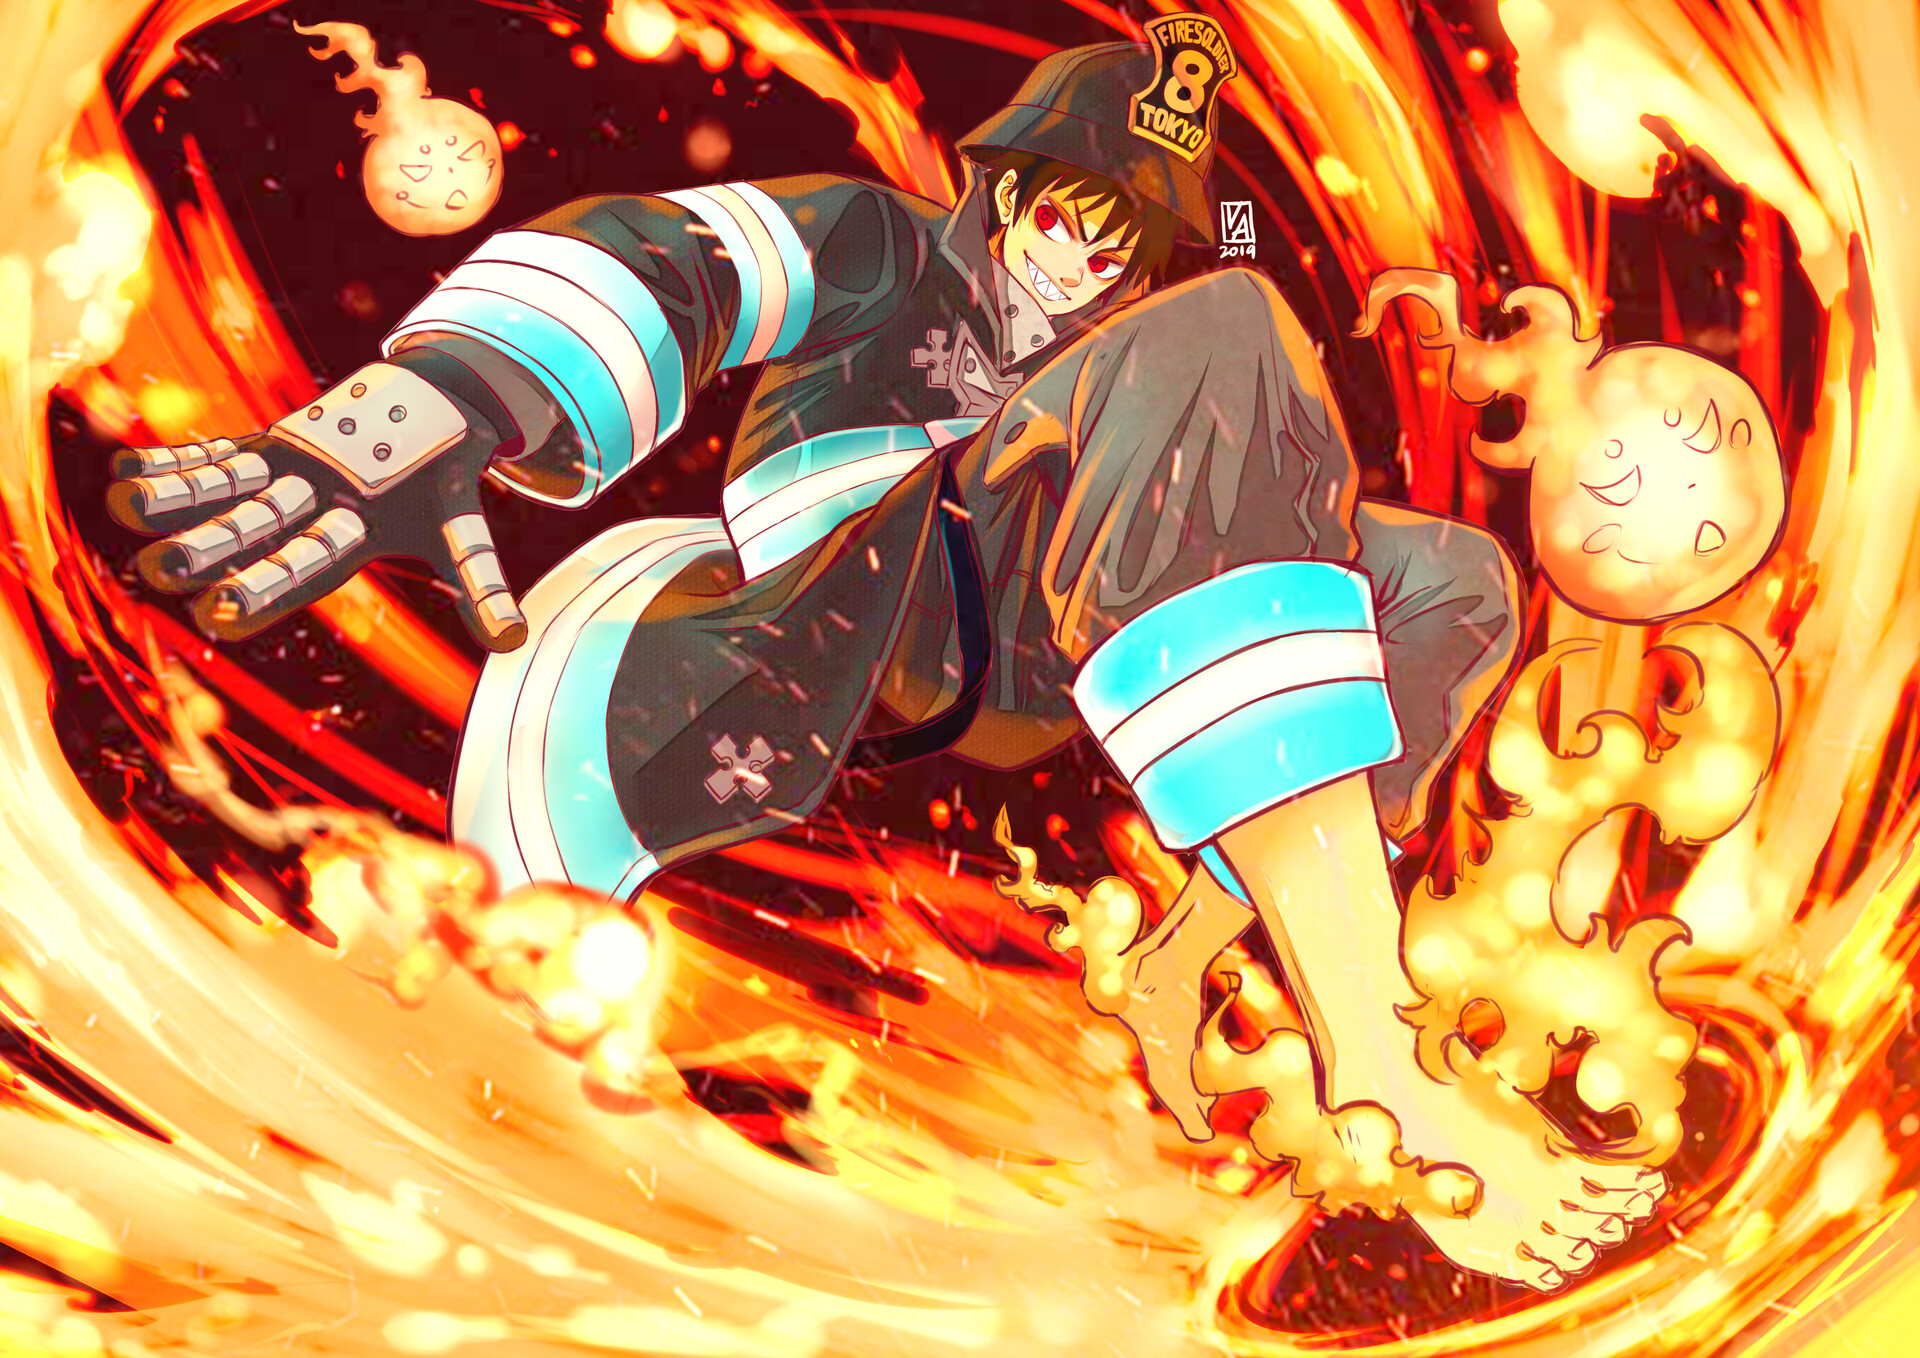 ArtStation - Fire Force anime illustrations 2020